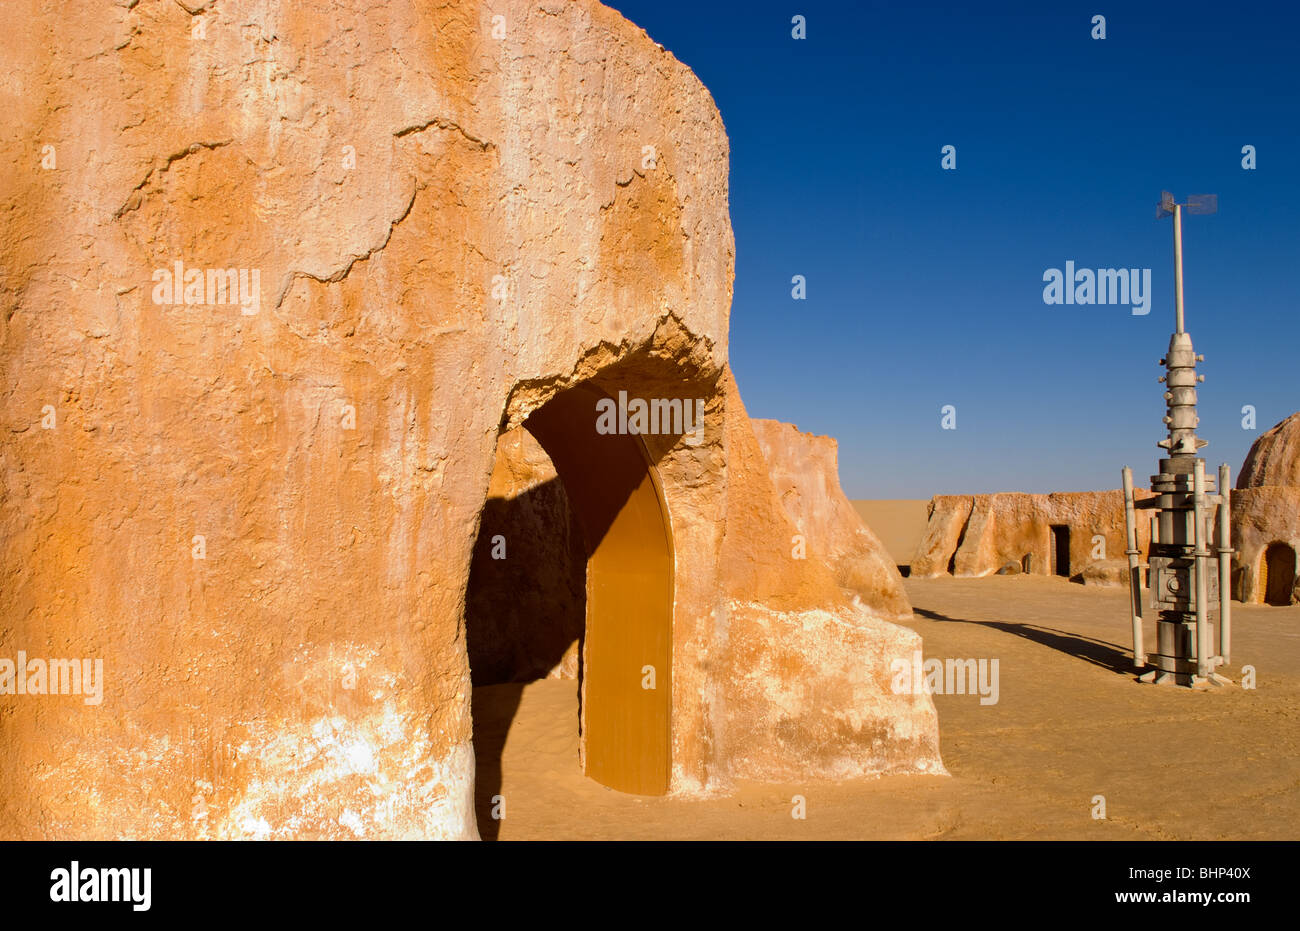 Famous movie set of Star Wars movies in Sahara Desert near Tozeur Tunisia Africa Stock Photo